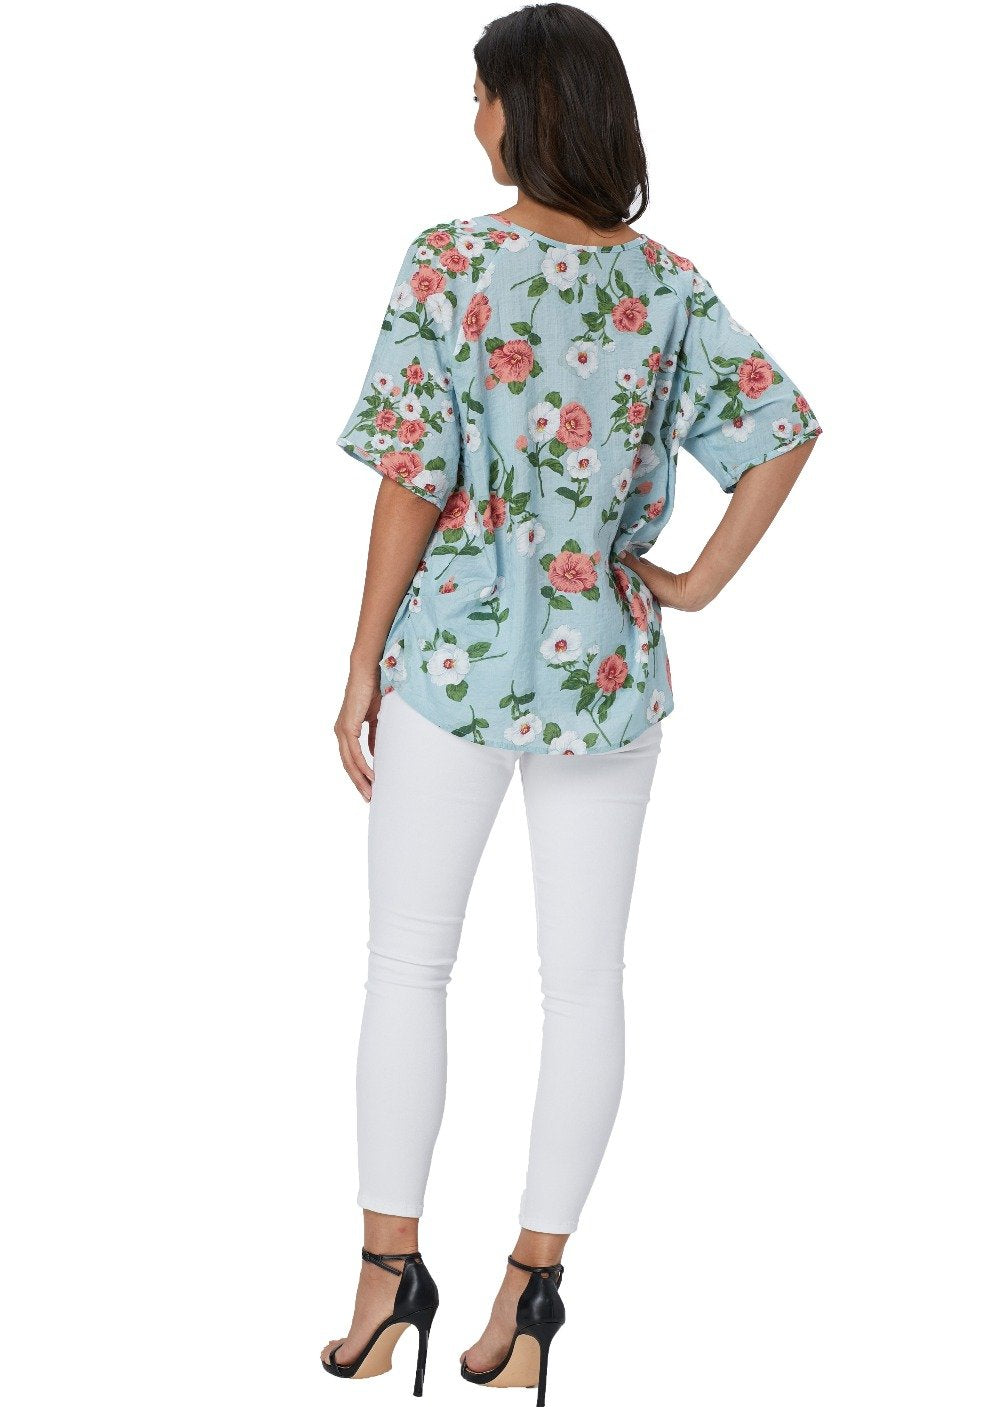 Womens Plus Size Short Sleeve Tops Floral Print Casual 100% Cotton Blouses